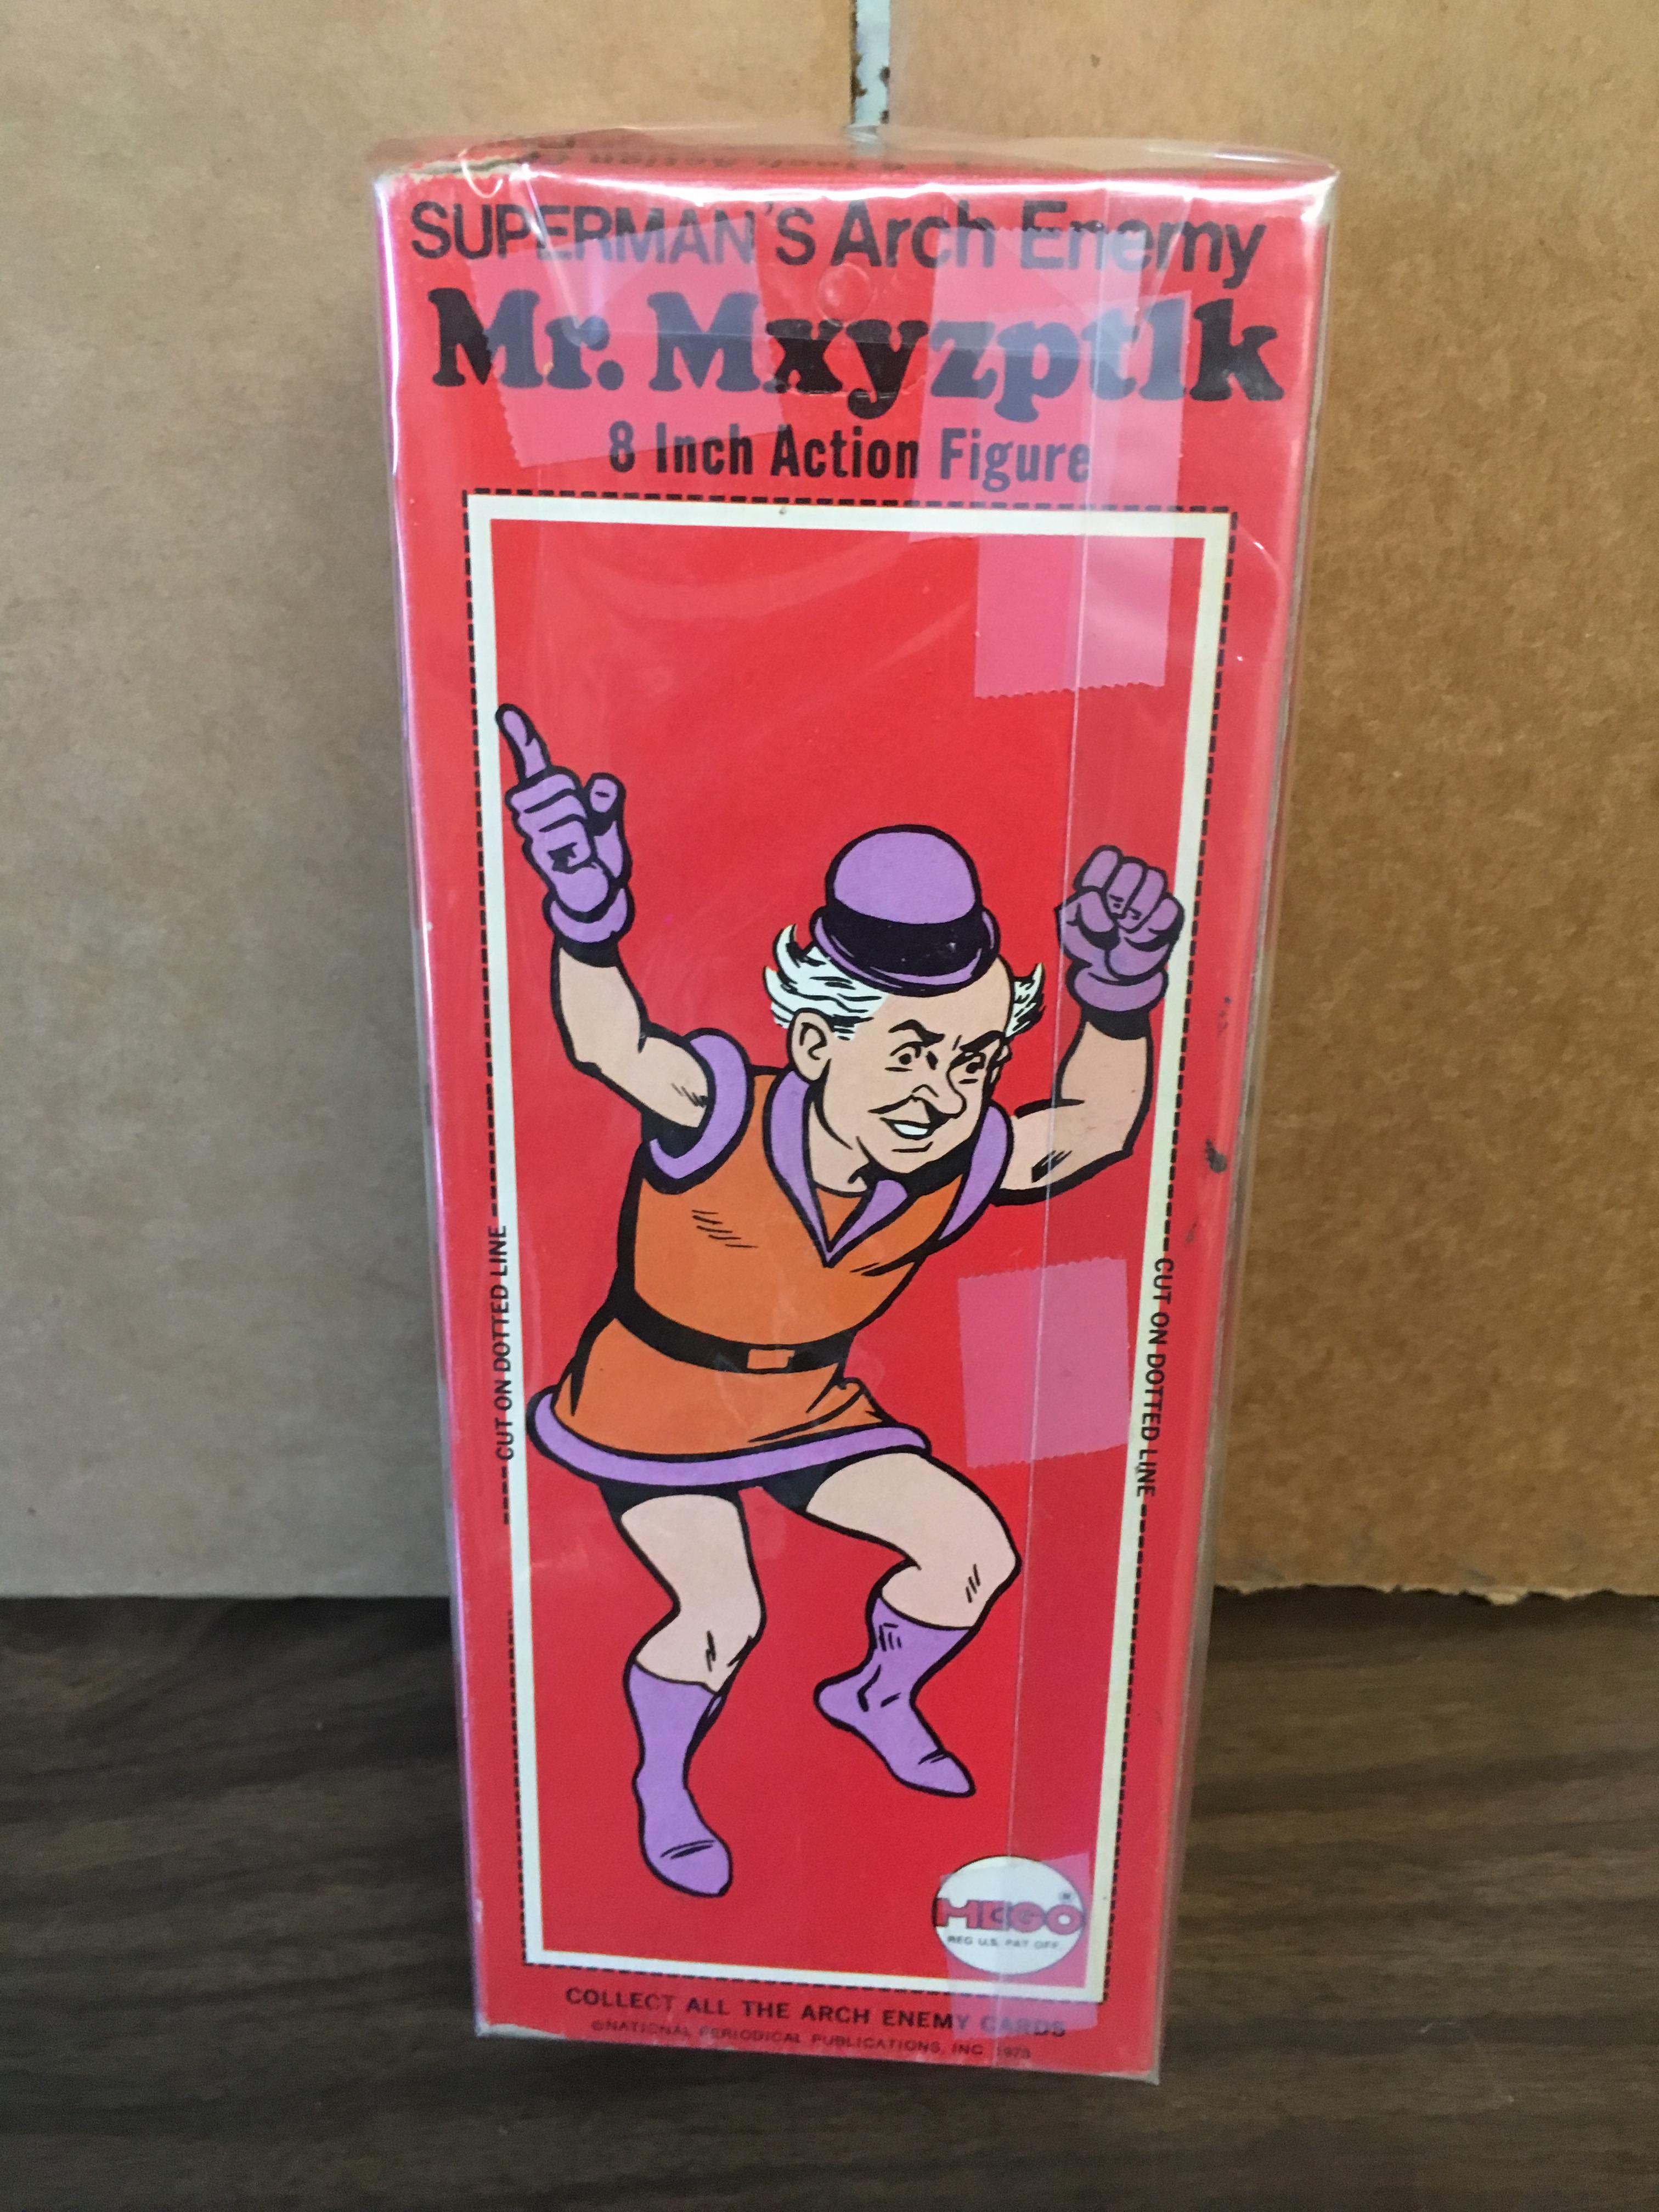 1973 Mego: Mr. Mxyzptlk in Original Box MIB - Super Rare in grade!